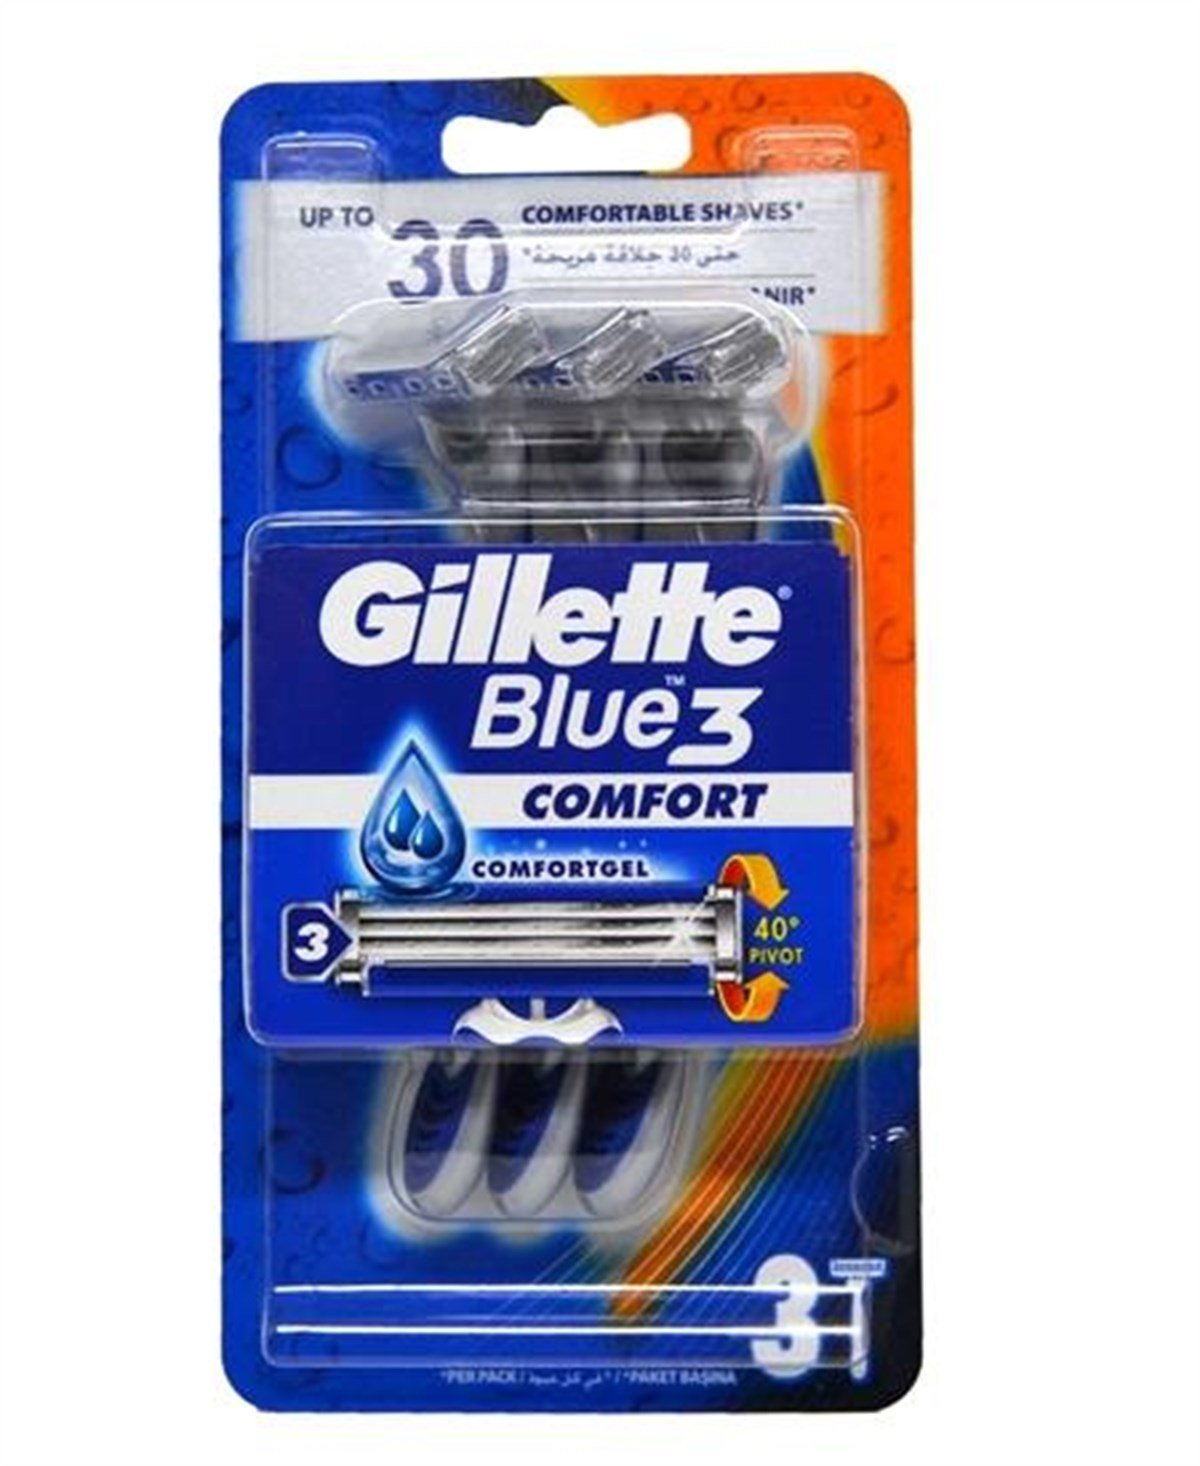 GILETTE Blue3 Comfort Kullan At Tıraş Bıçağı 3'lü | Farma Ucuz